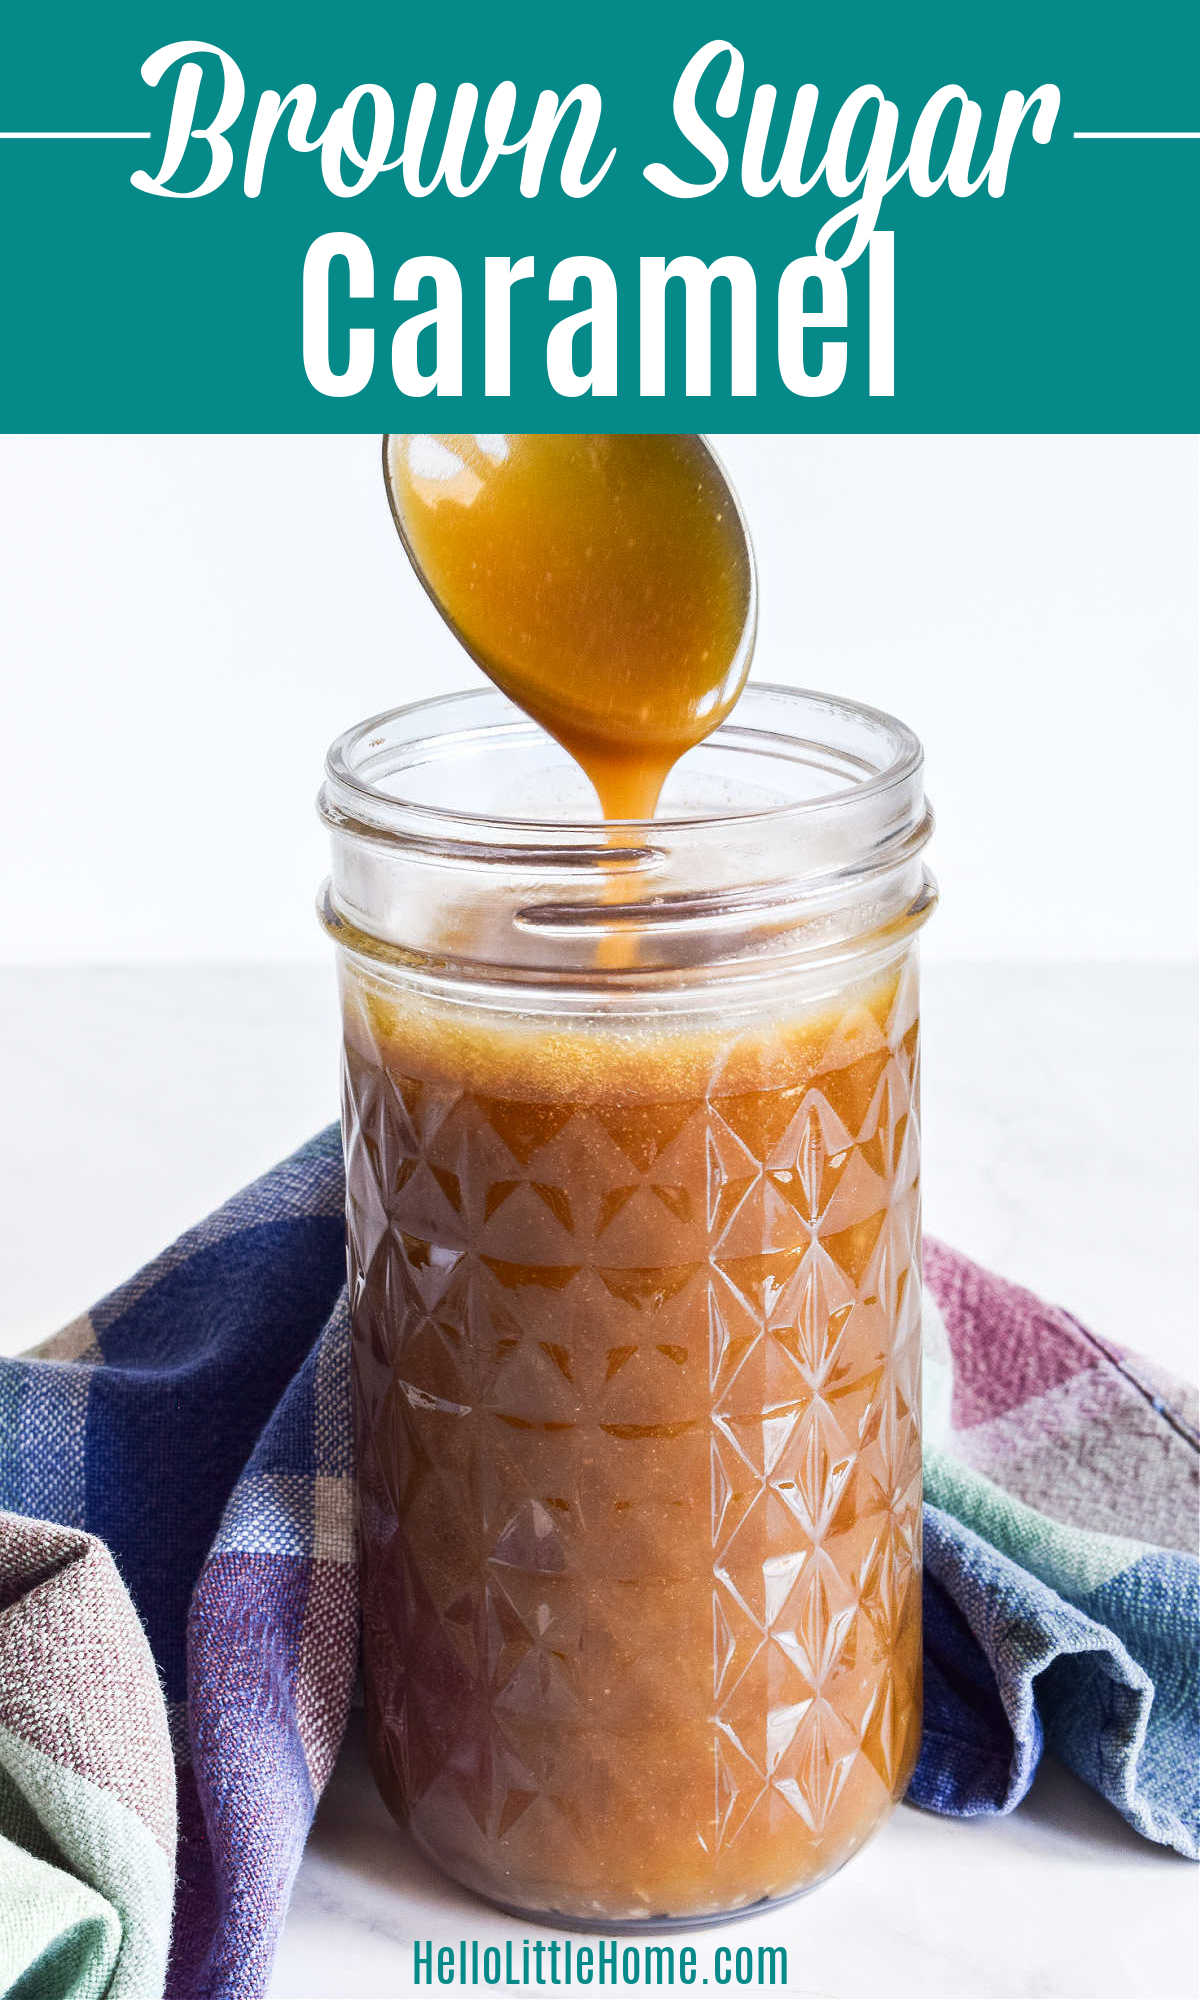 A spoon drizzling Brown Sugar Caramel into a jar.